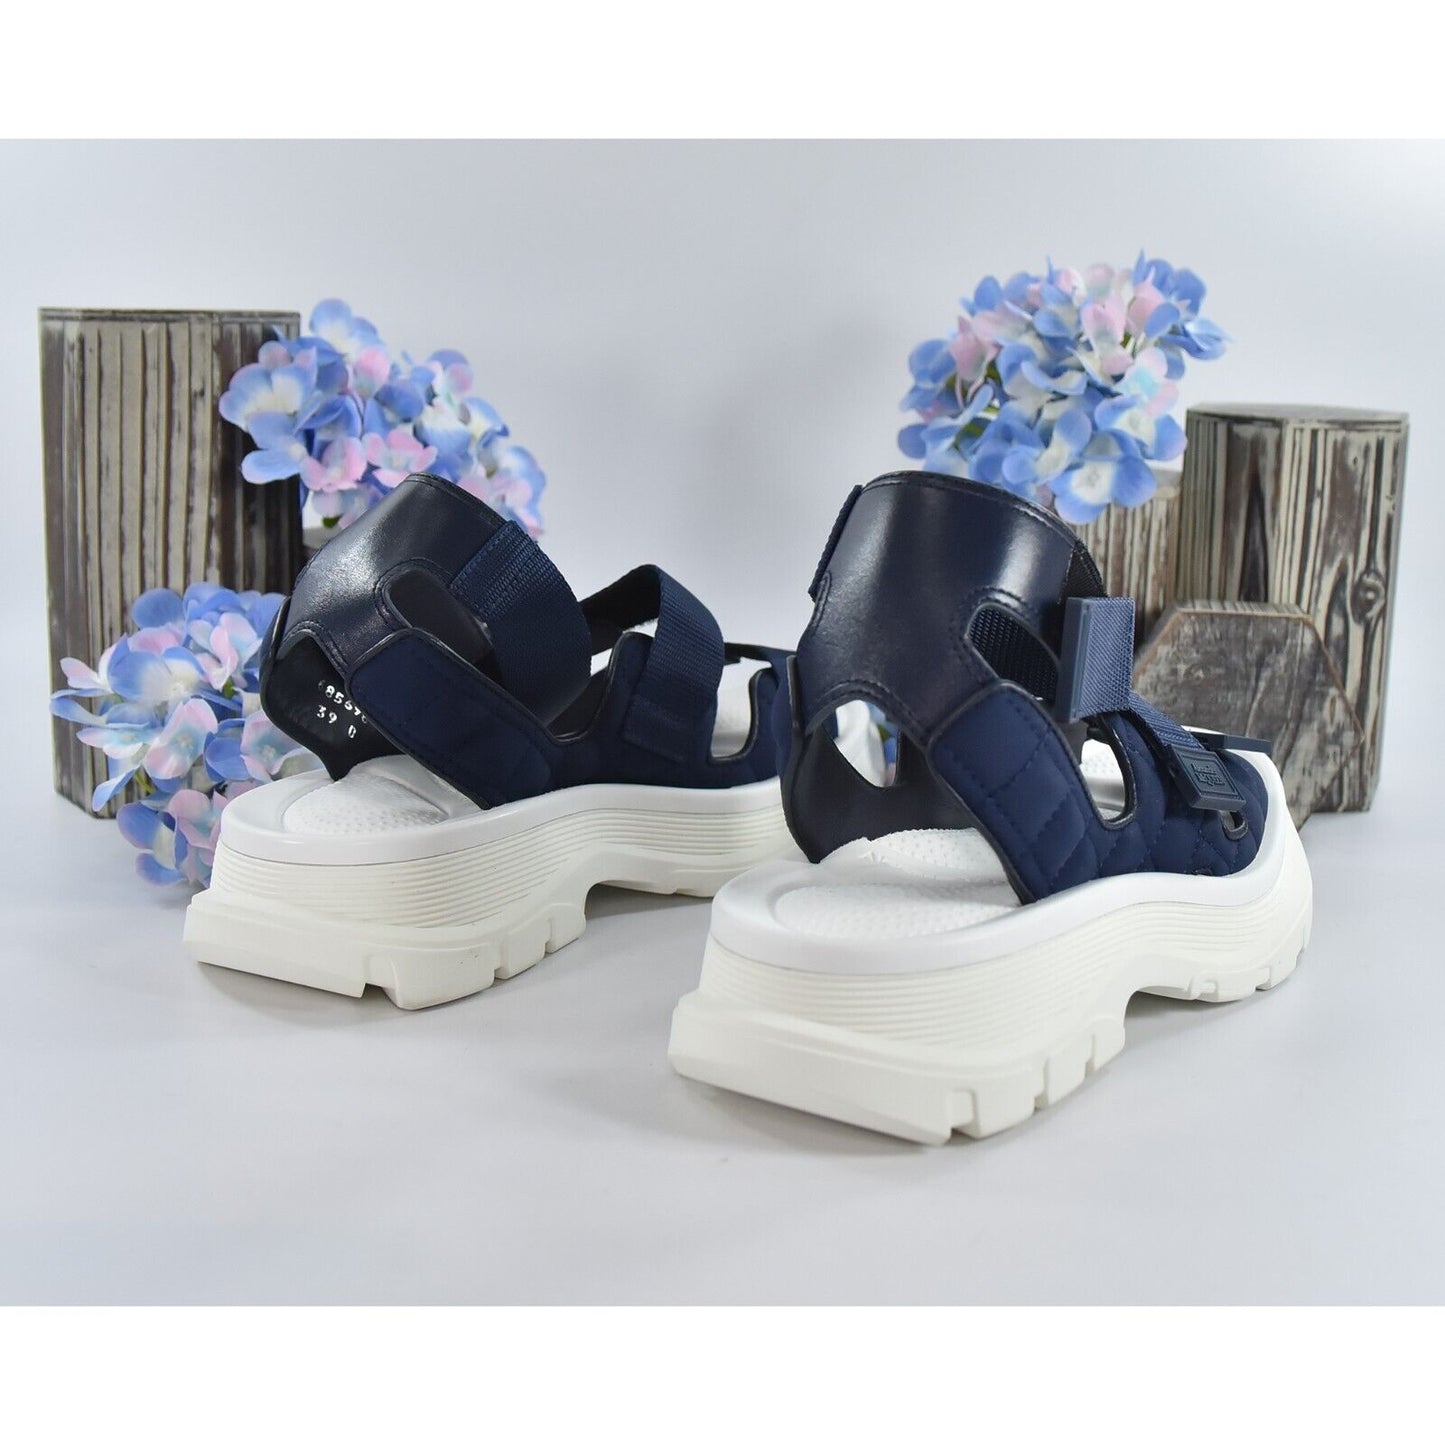 Alexander McQueen Navy White Hybrid Tech Leather Neoprene Sandals 39 NIB